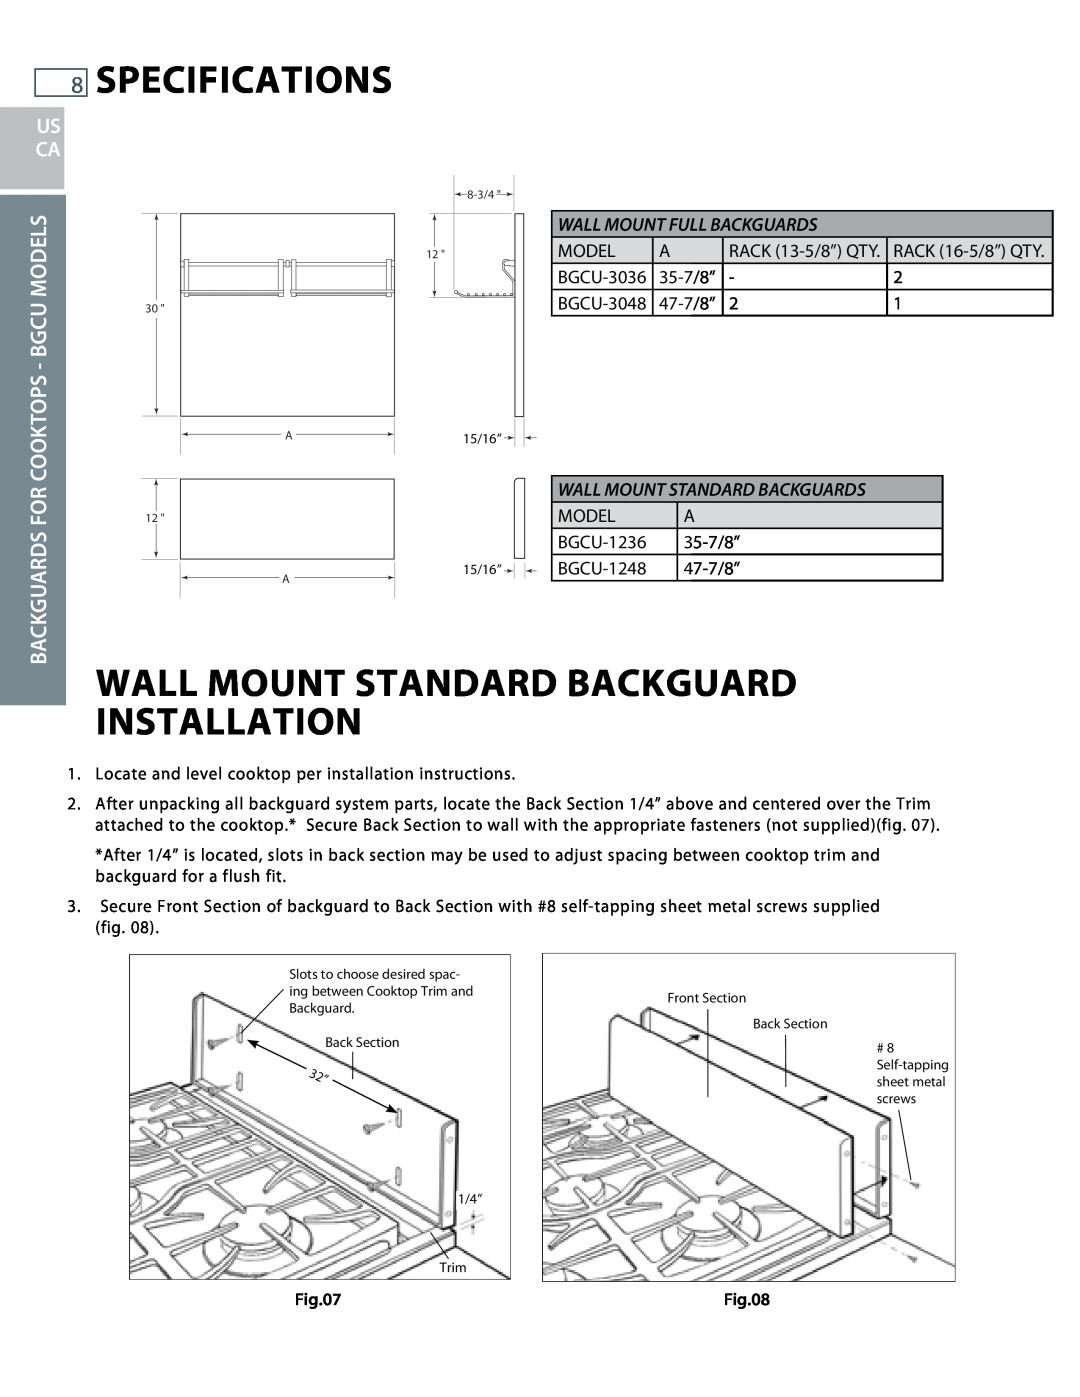 DCS BGCU Wall Mount Standard Backguard Installation, Backguards For Cooktops - Bgcu Models, Wall Mount Standard Backguards 